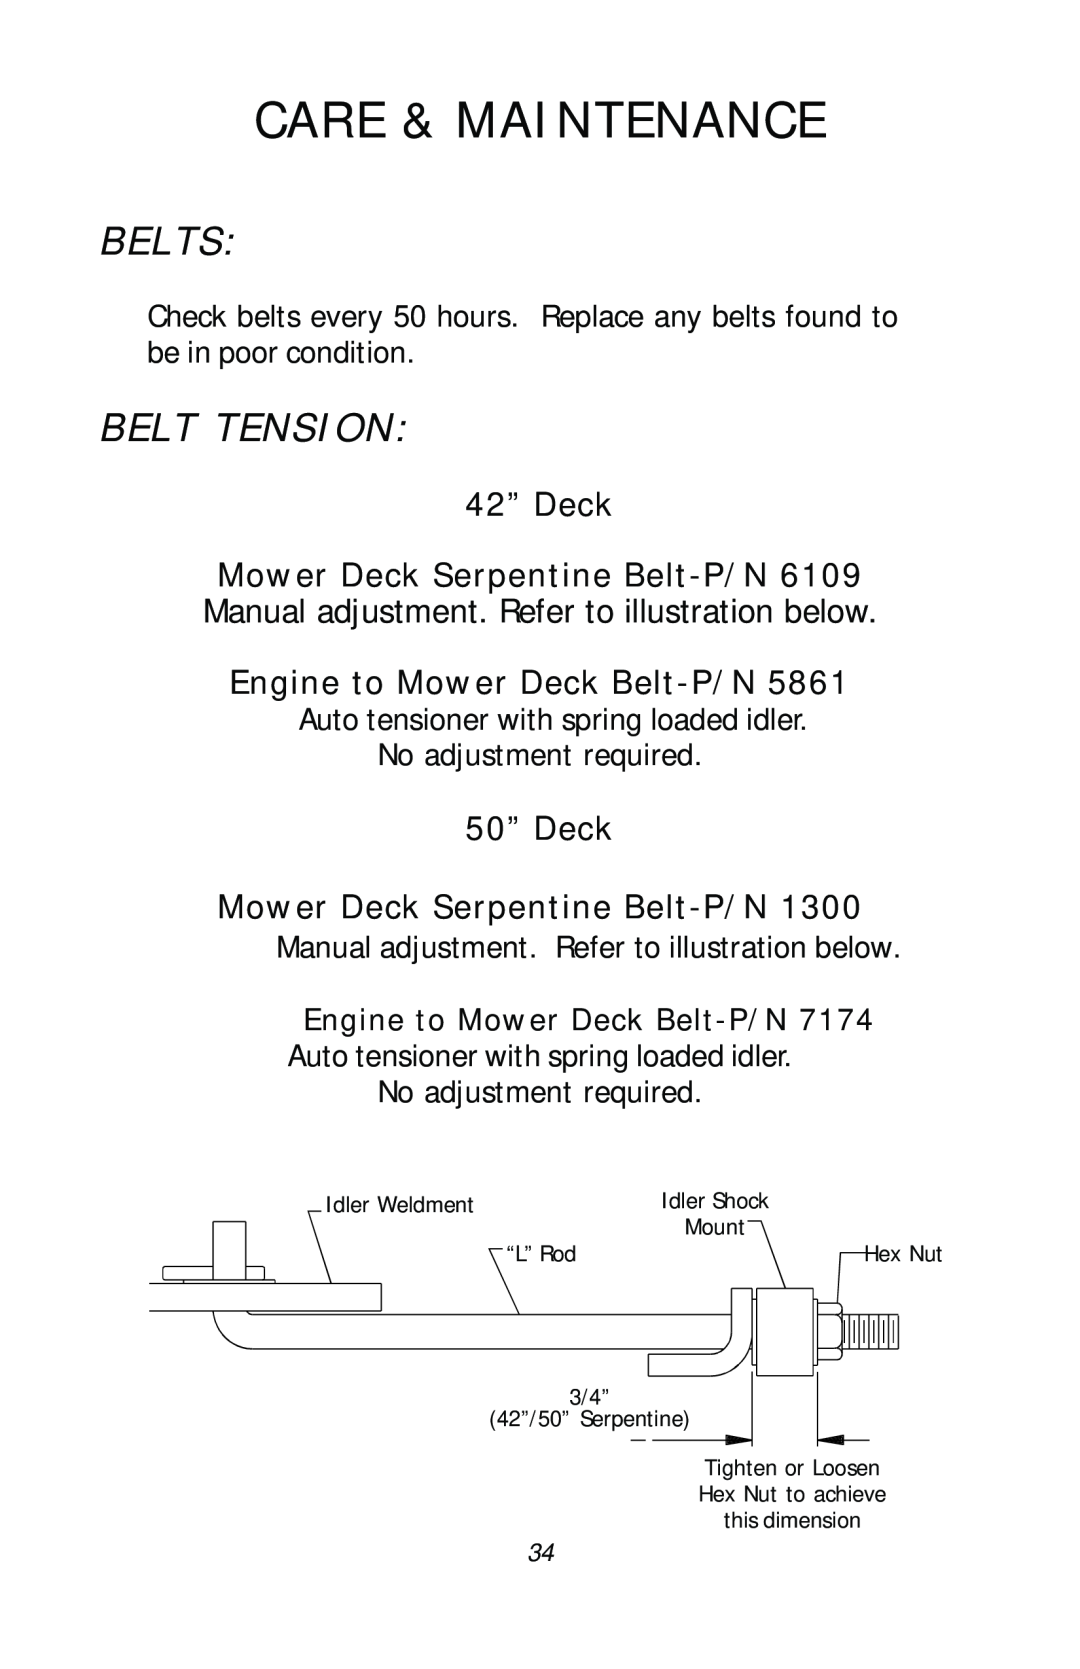 Dixon ZTR 4518, ZTR 4516, ZTR 4515 Belts, Belt Tension, Care & Maintenance, 42” Deck, Engine to Mower Deck Belt-P/N5861 